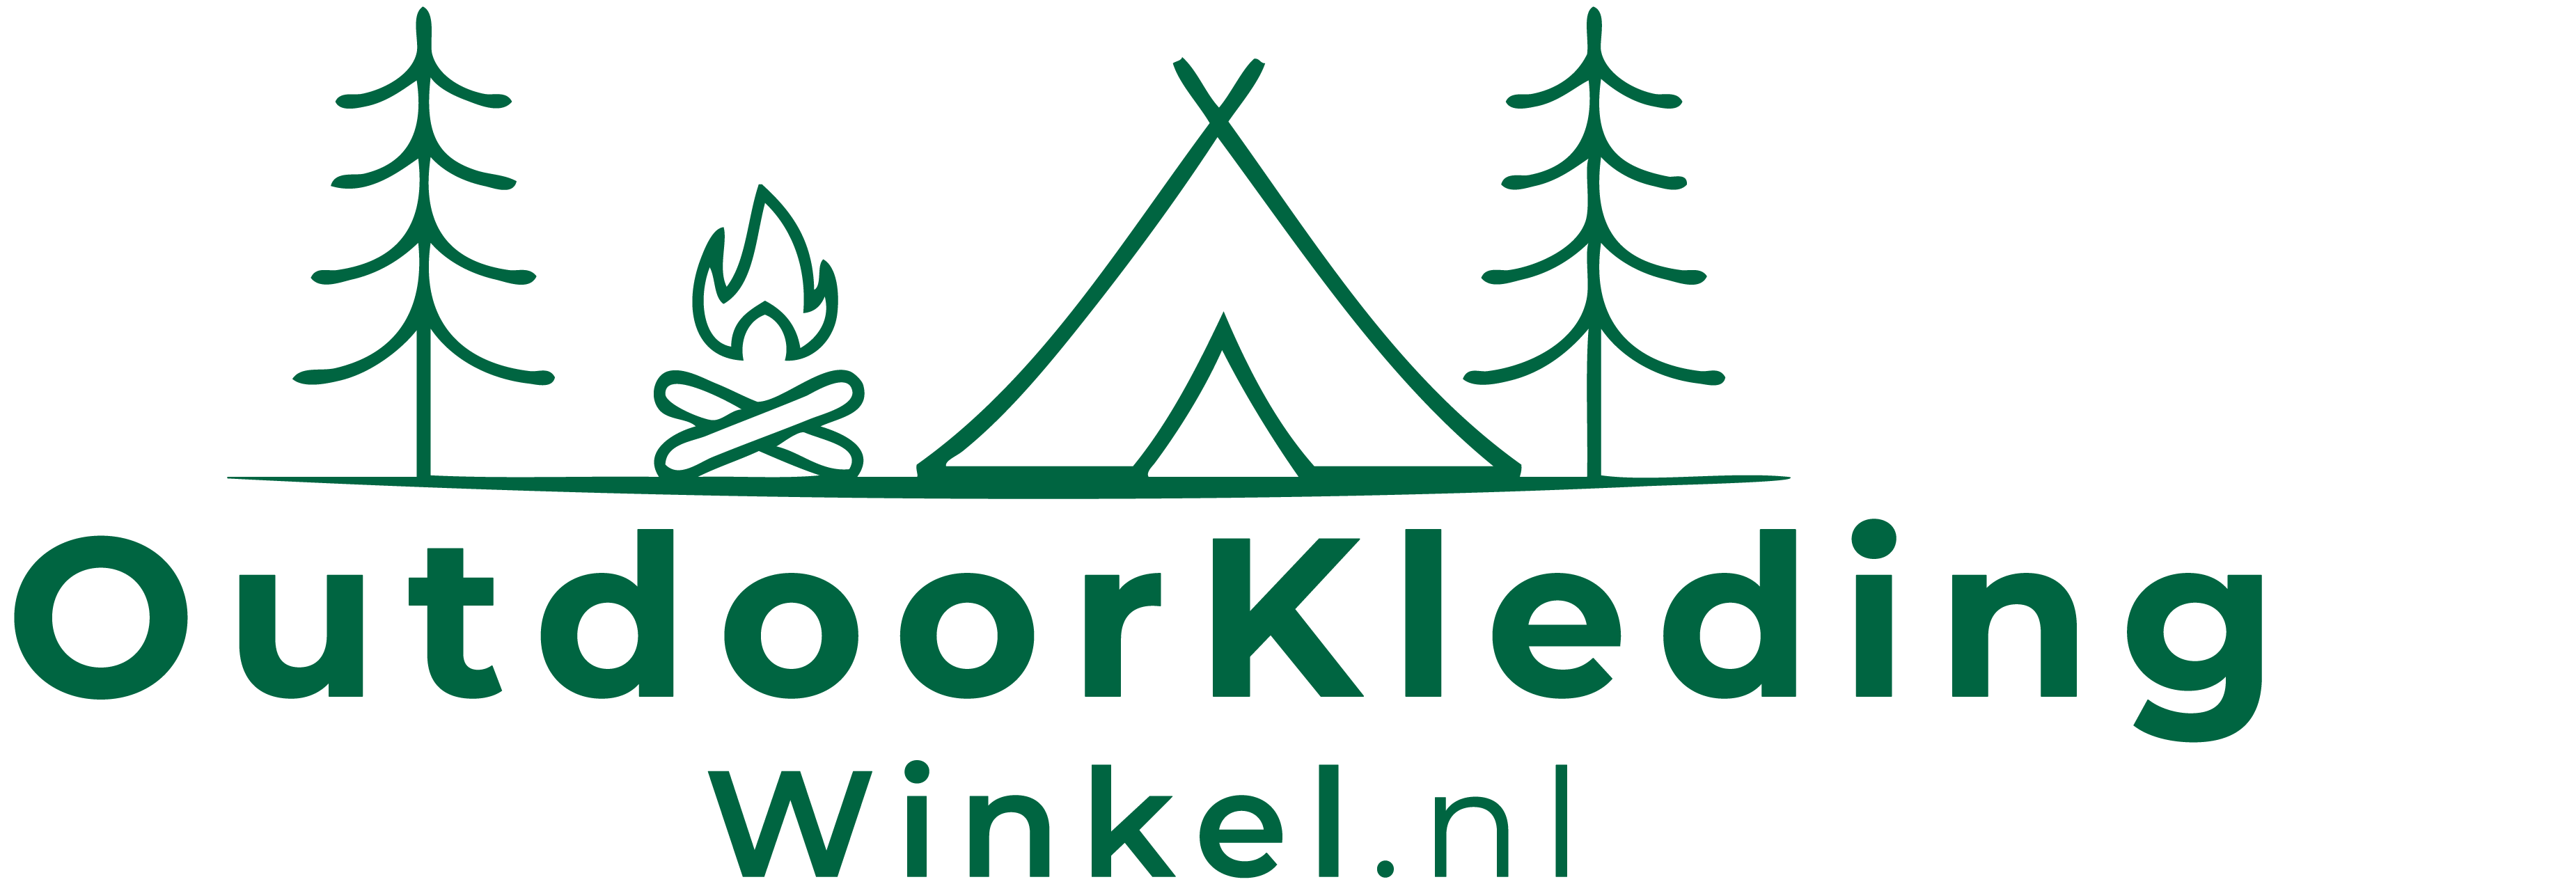 OutdoorKledingWinkel.nl logo